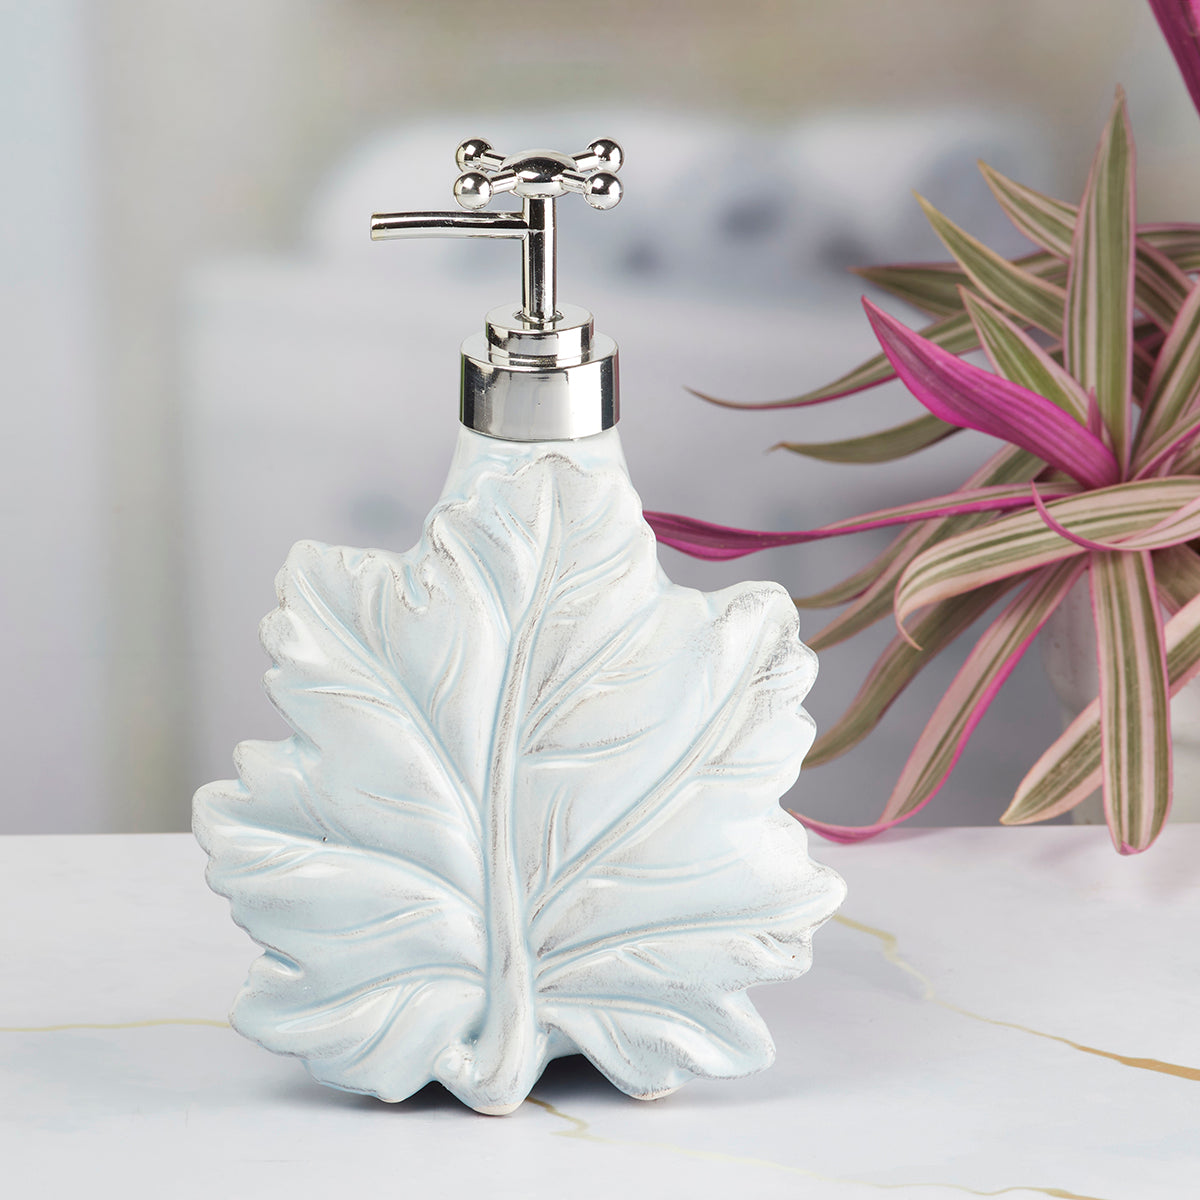 Ceramic Soap Dispenser handwash Pump for Bathroom, Set of 1, Pink (8636)